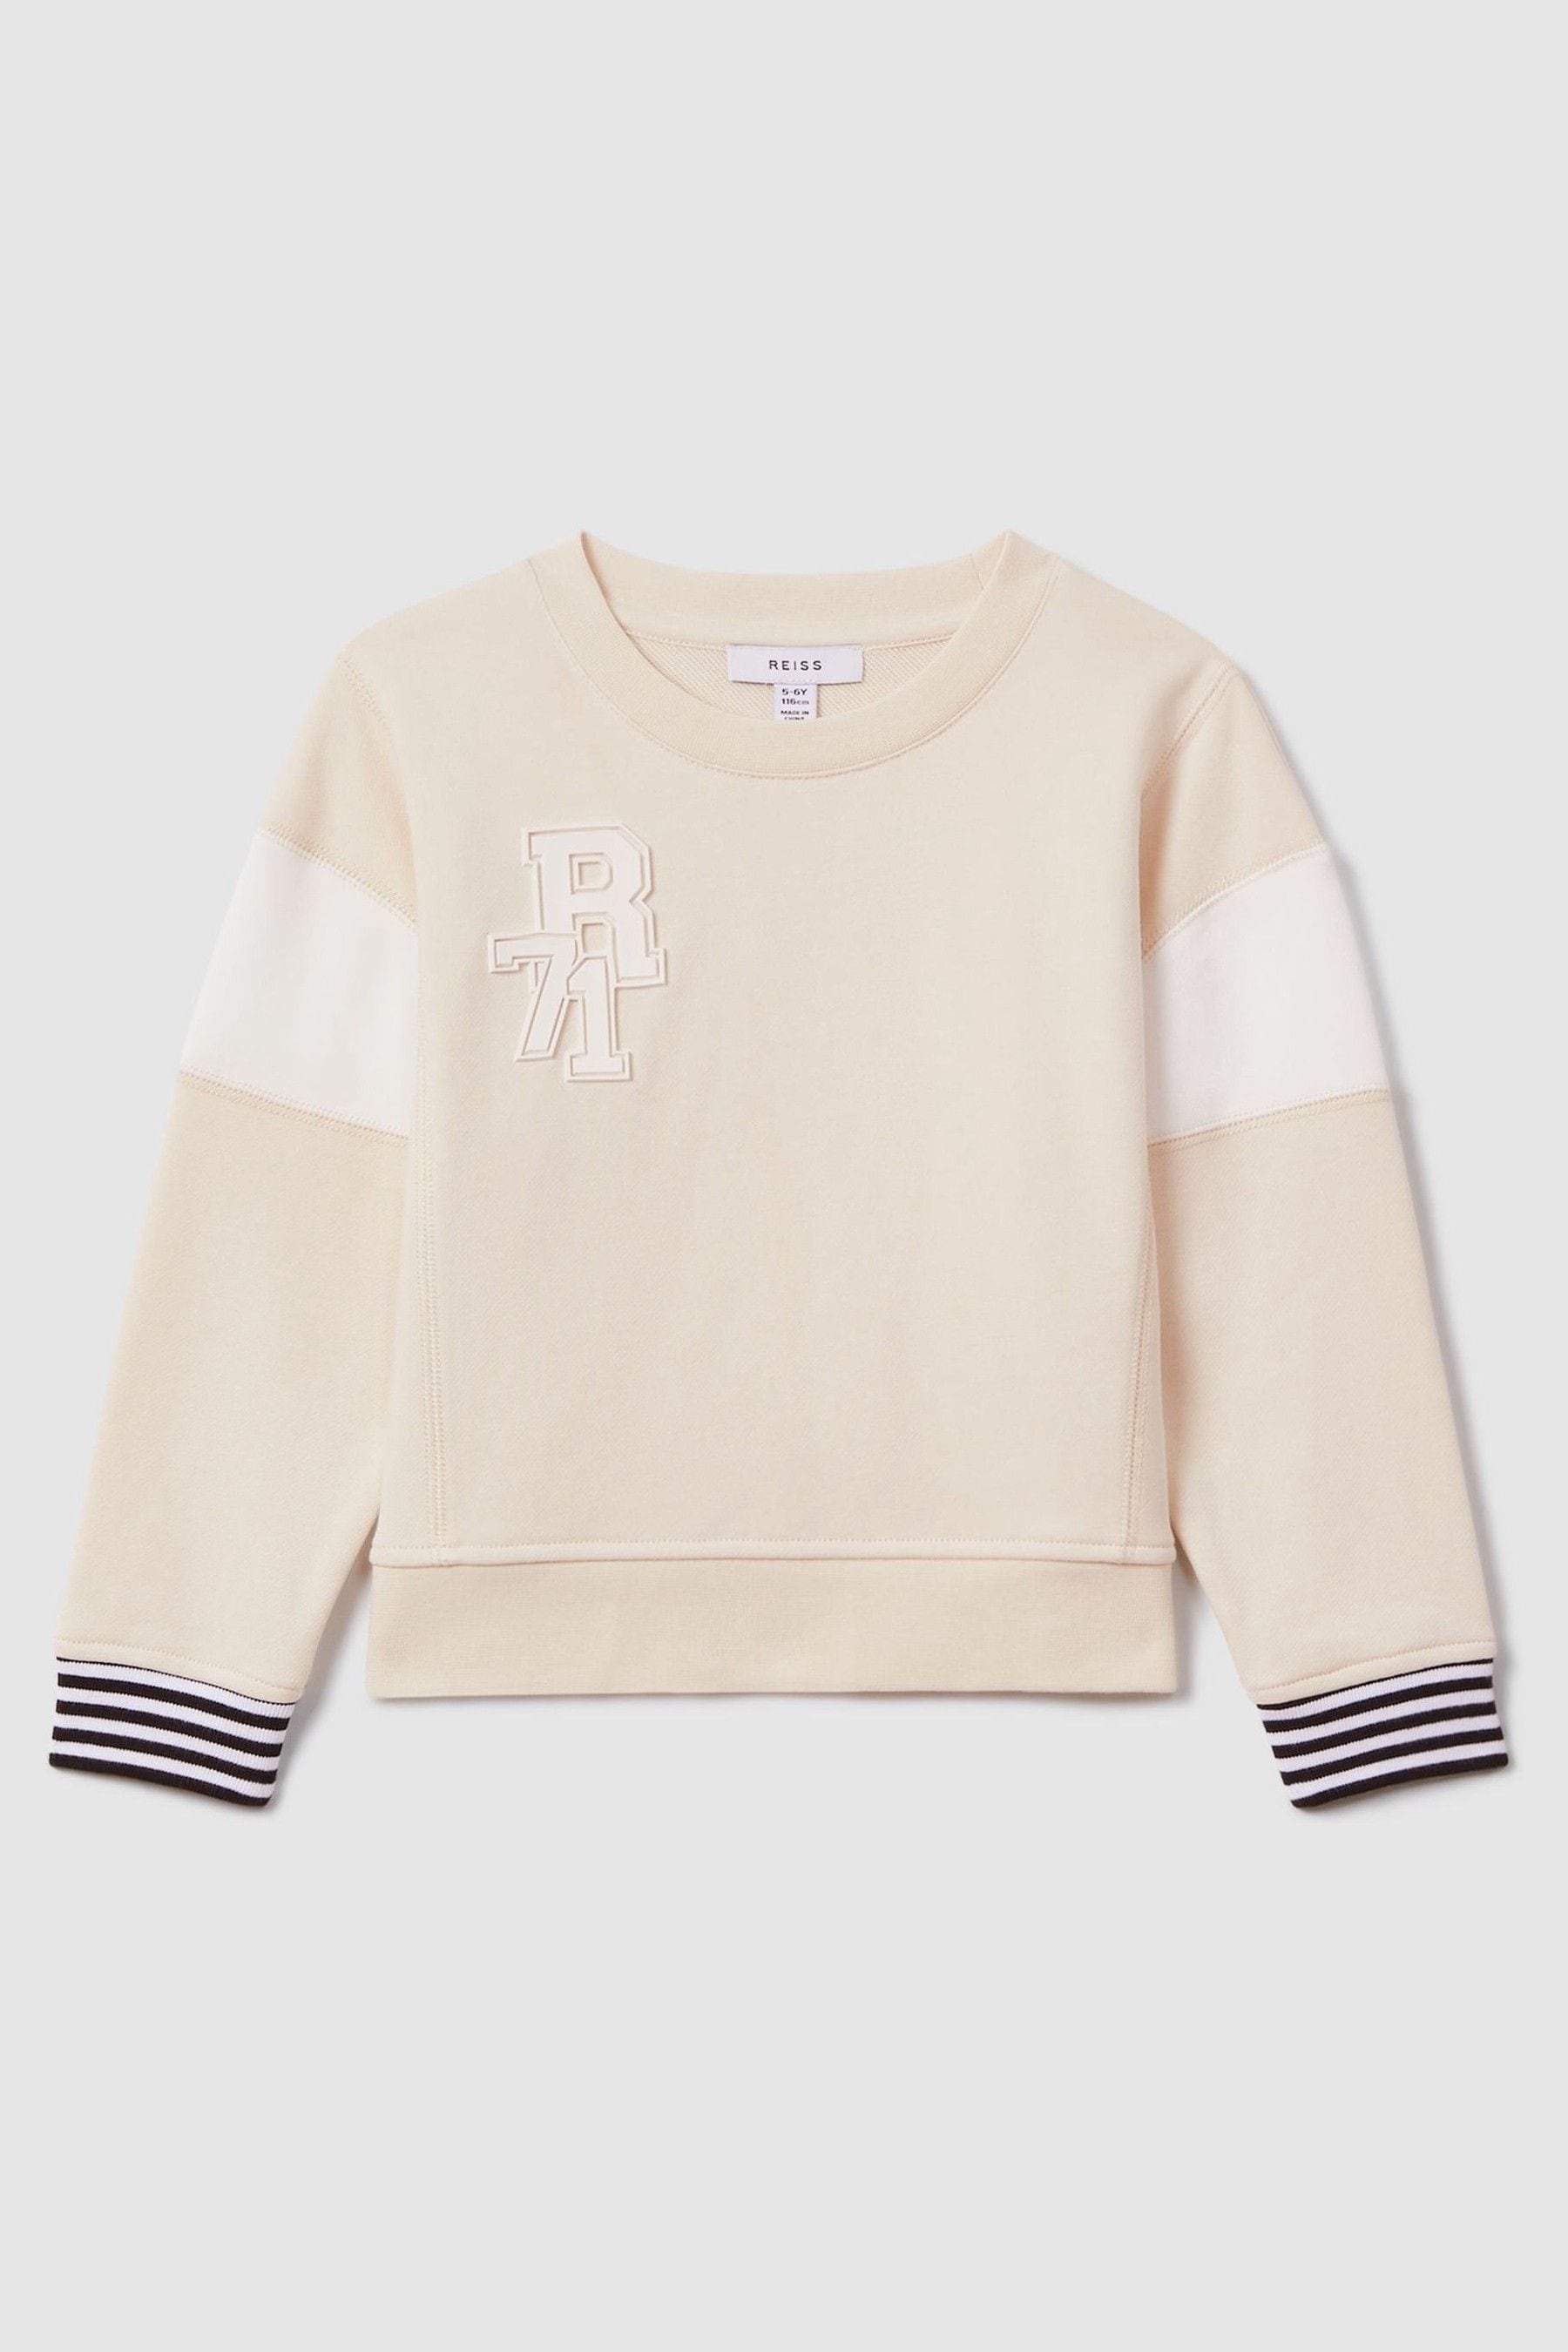 Reiss Colette - Ivory Teen Cotton Blend Logo Sweatshirt, In Neutral